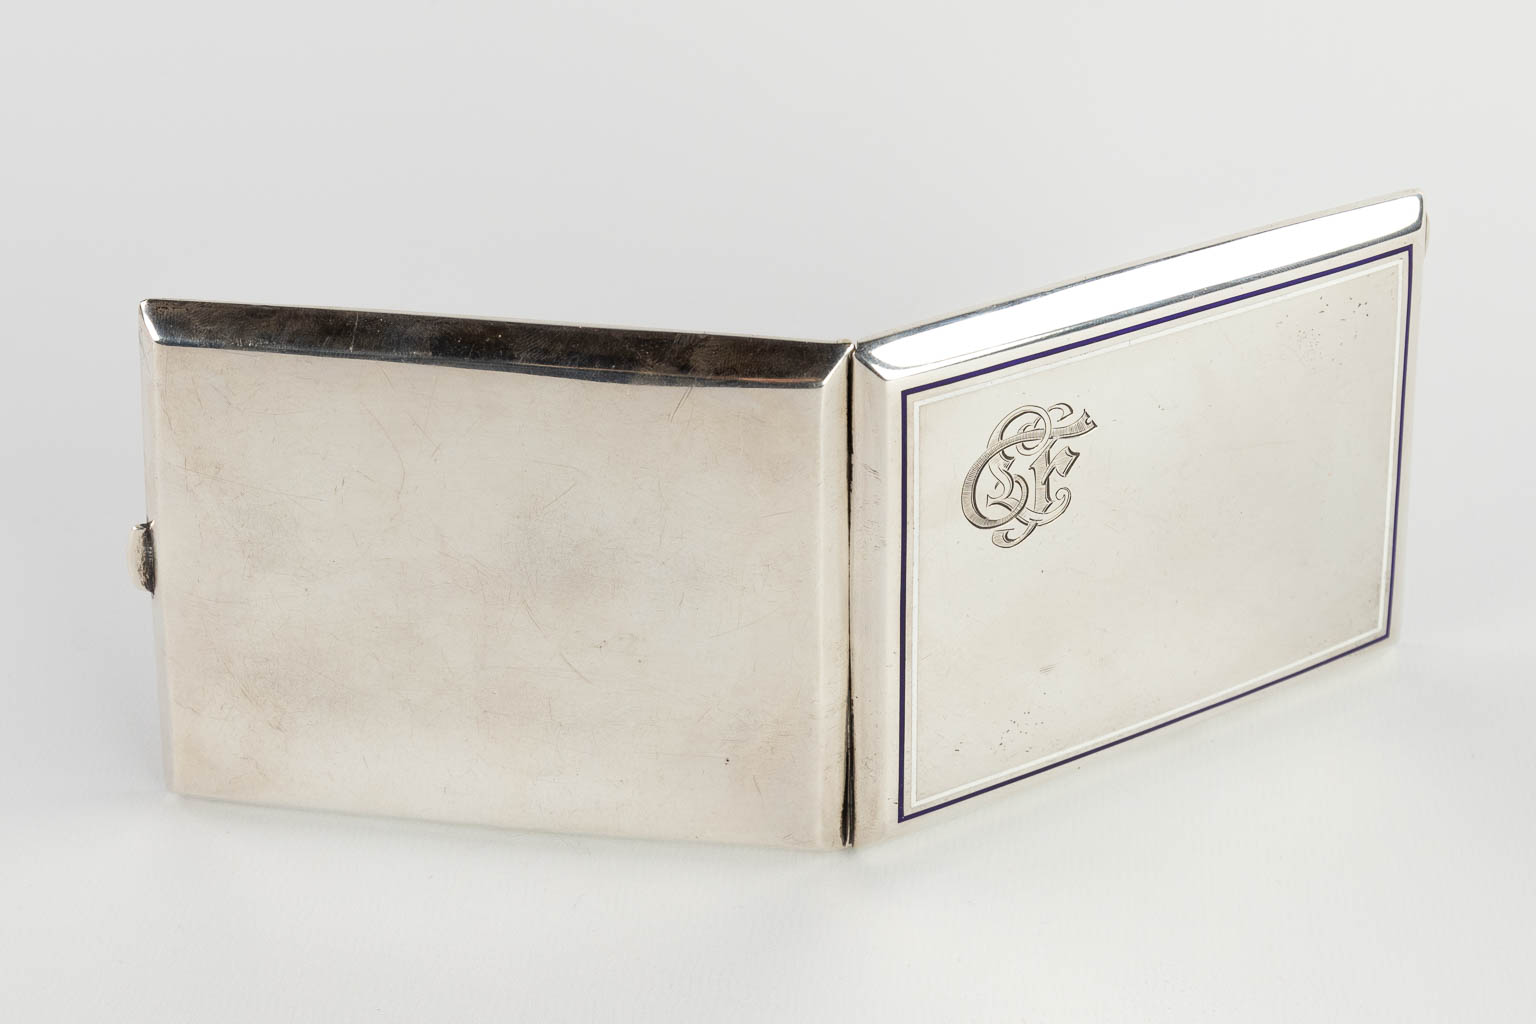 Hermès Paris, a cigarette box, silver. (W:11 x H:9 cm)